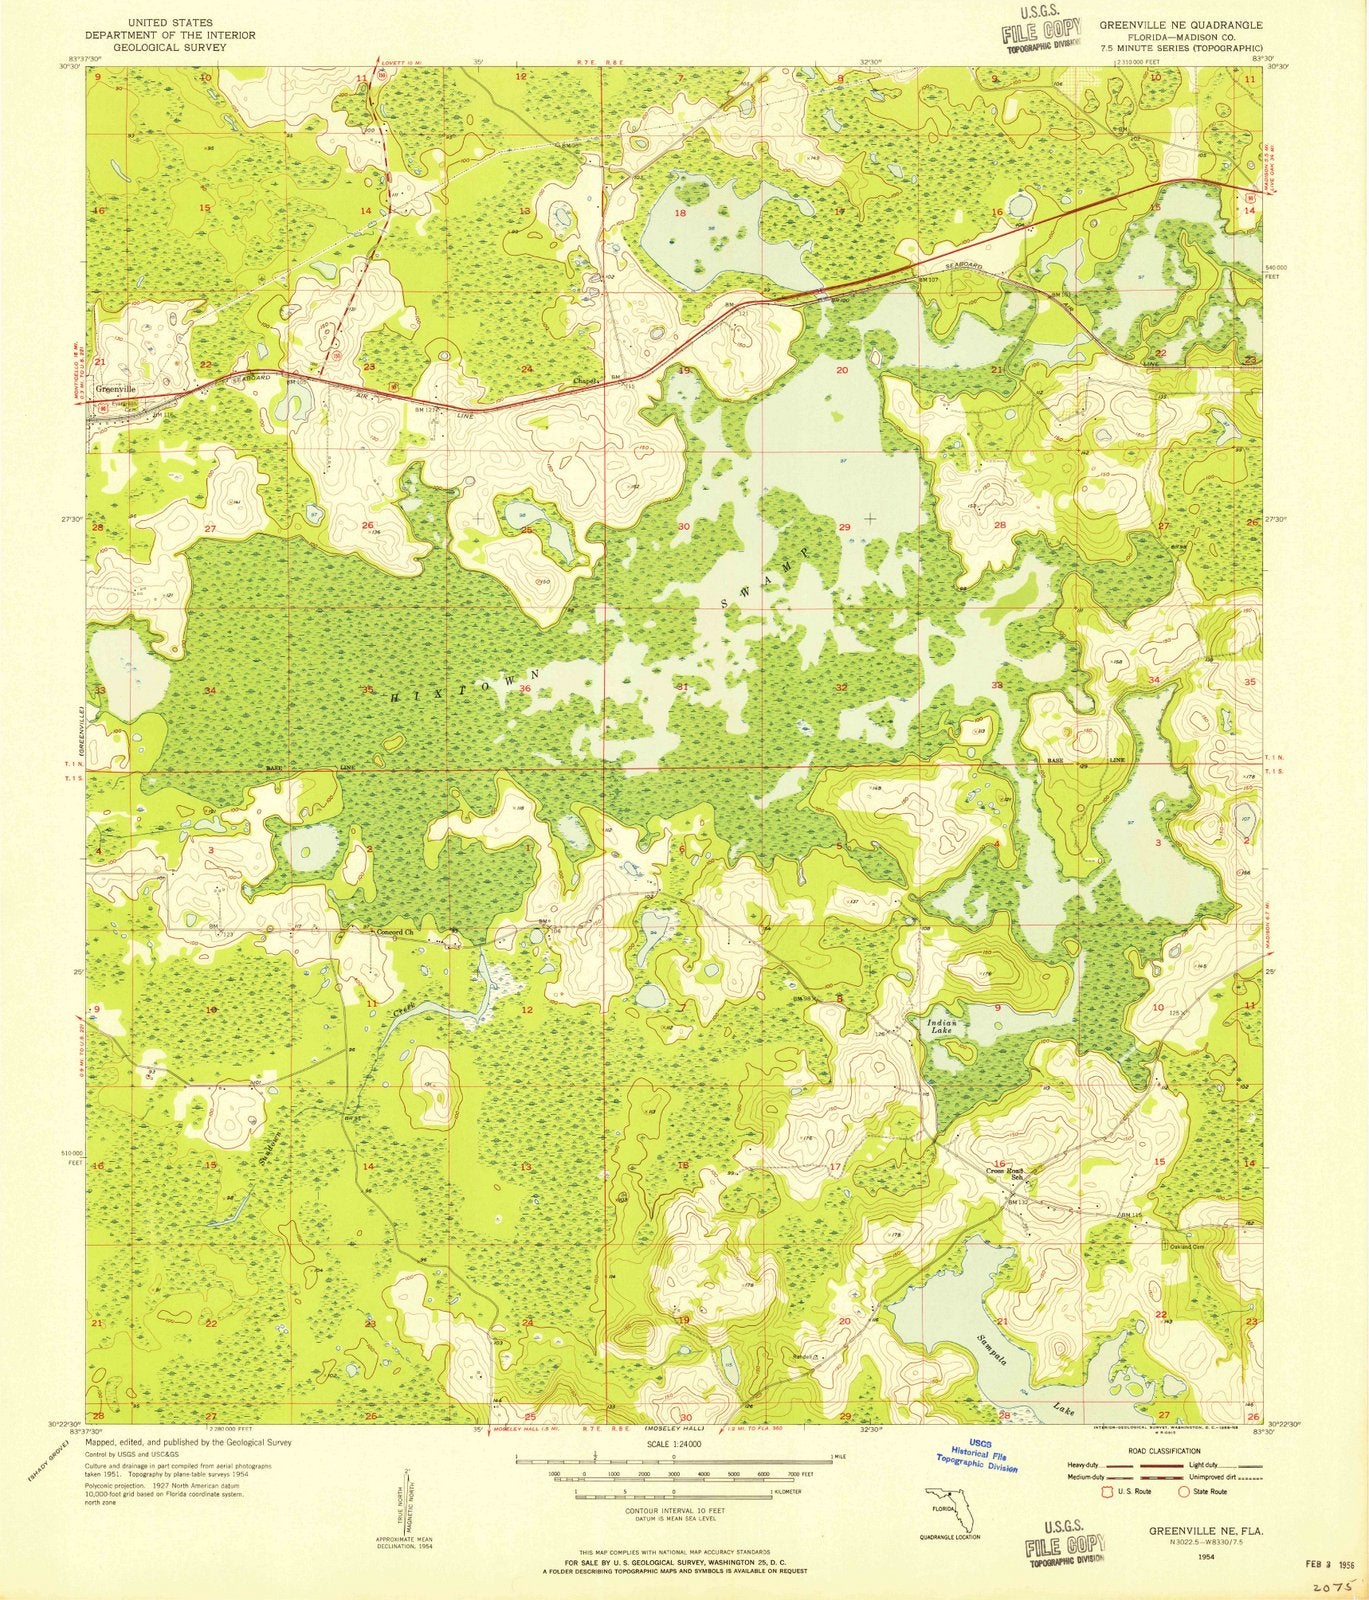 1954 Greenville, FL - Florida - USGS Topographic Map